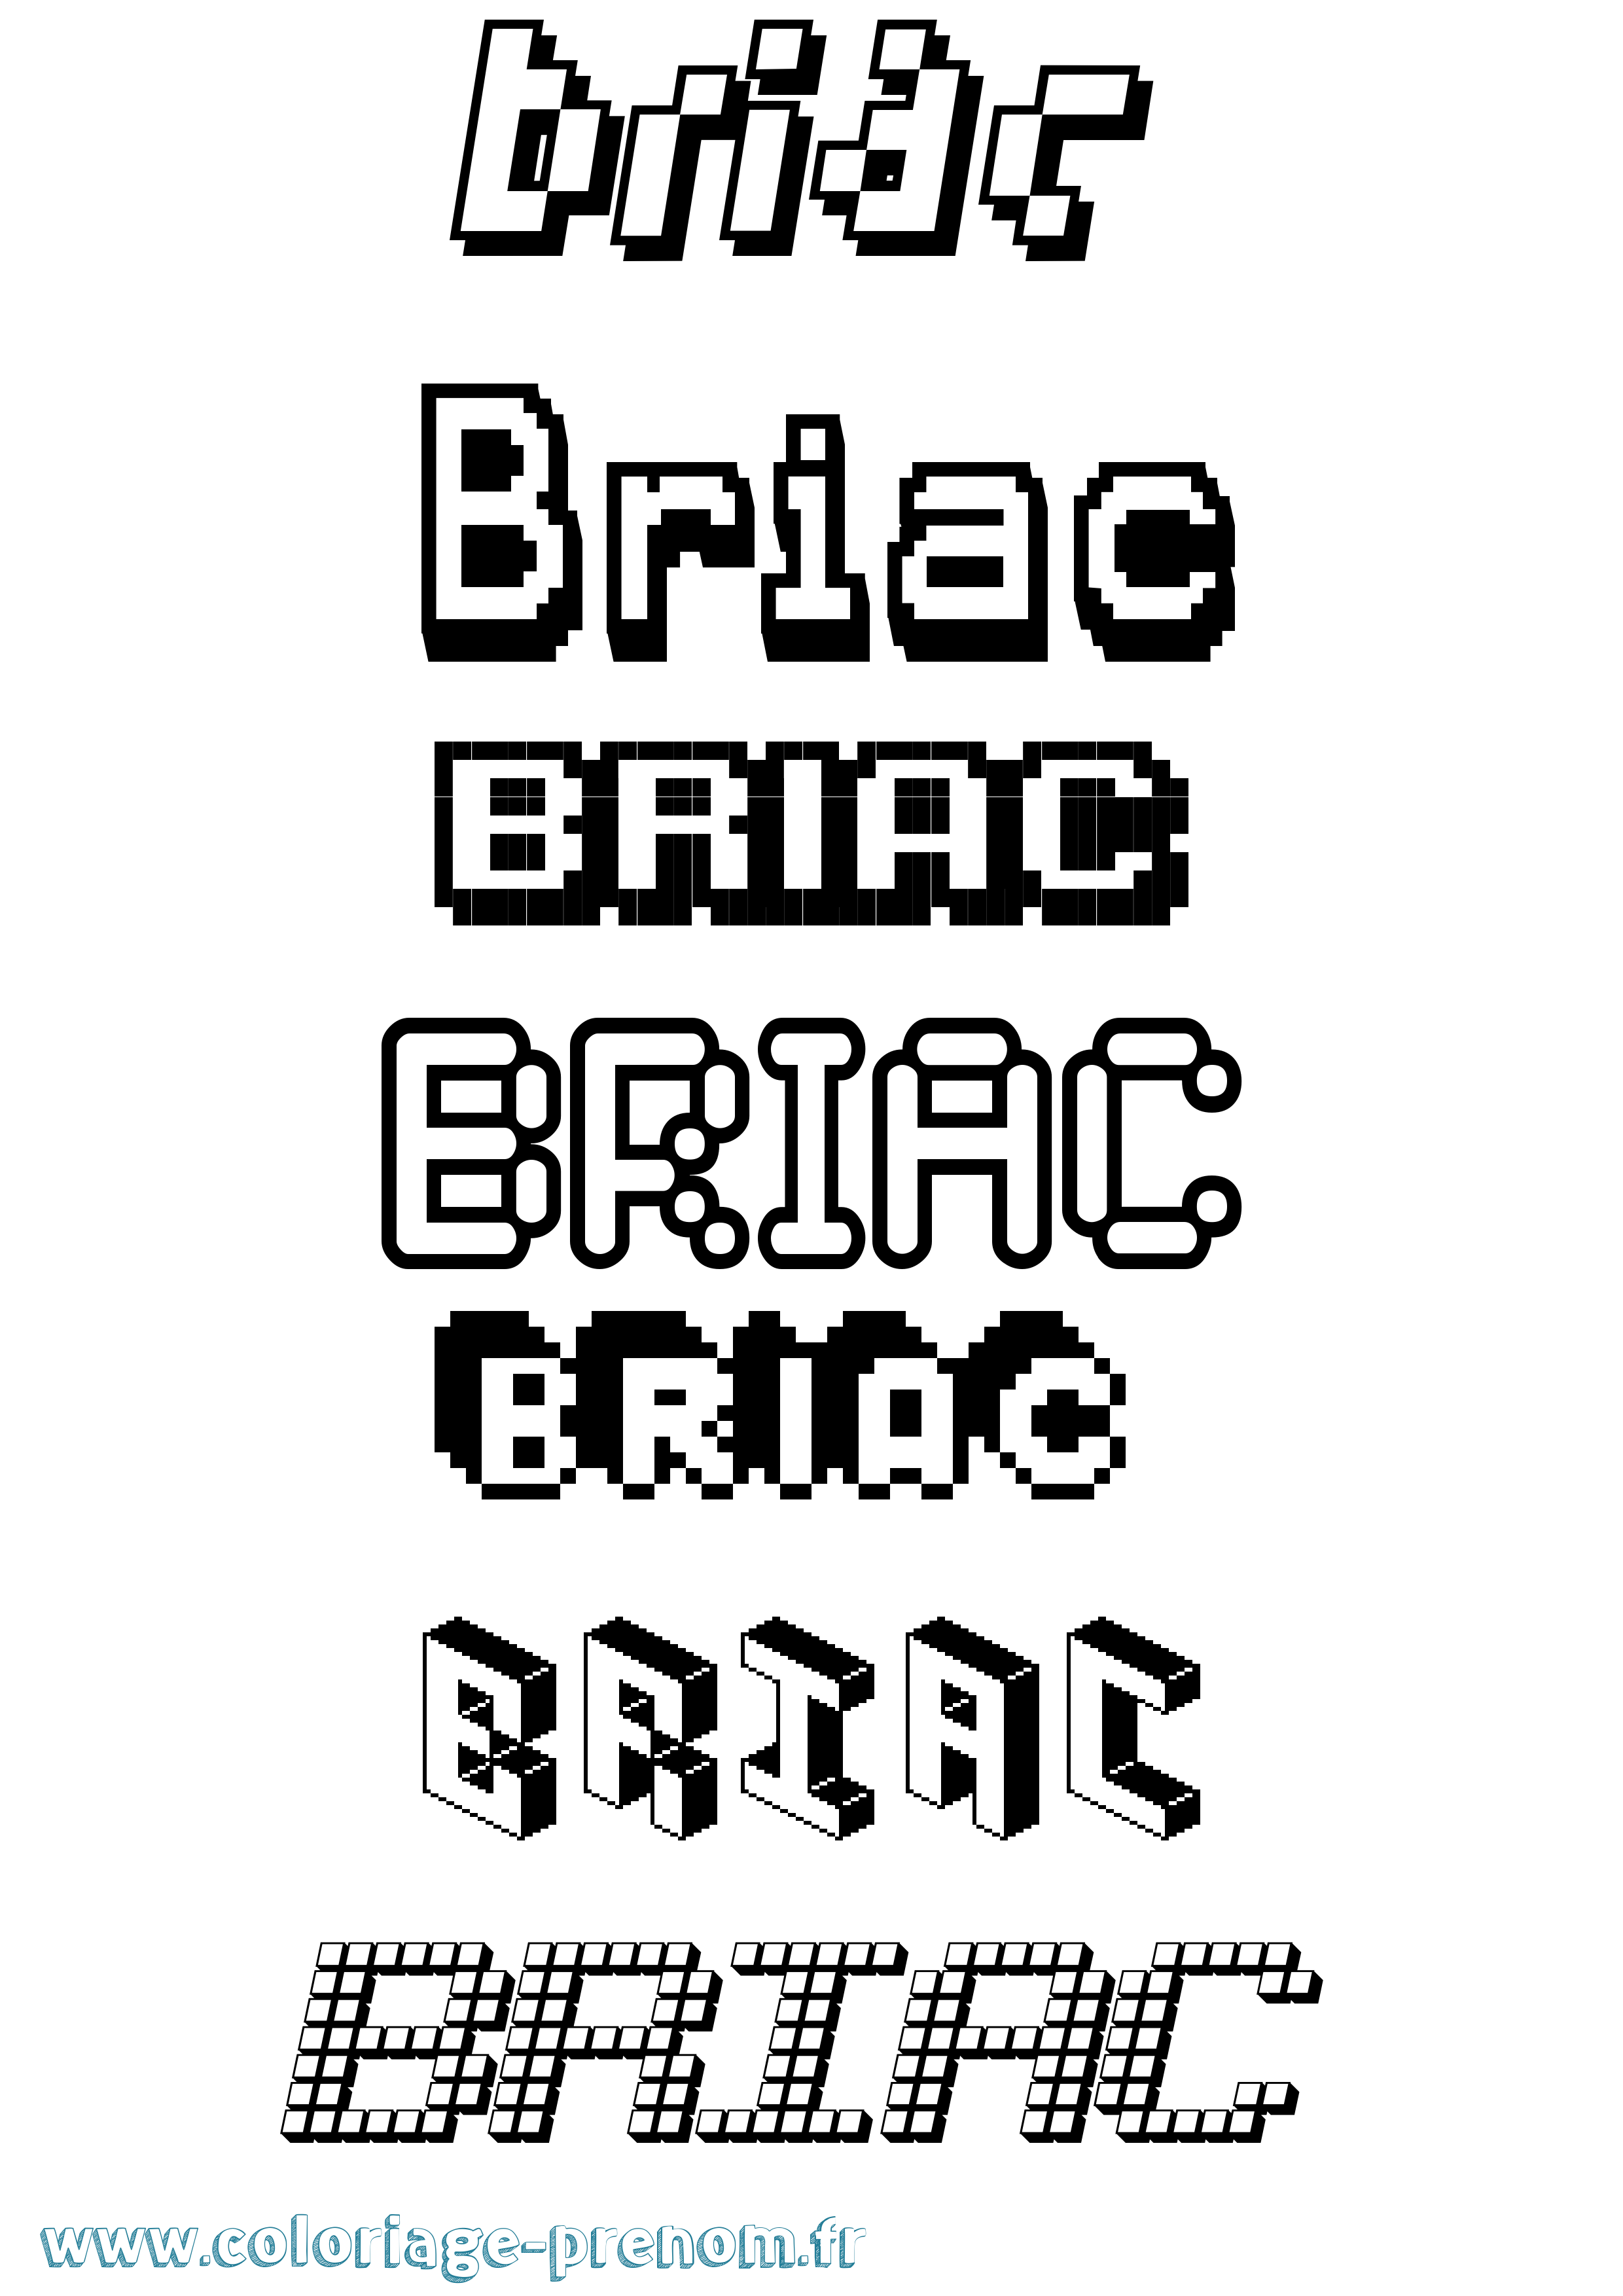 Coloriage prénom Briac Pixel